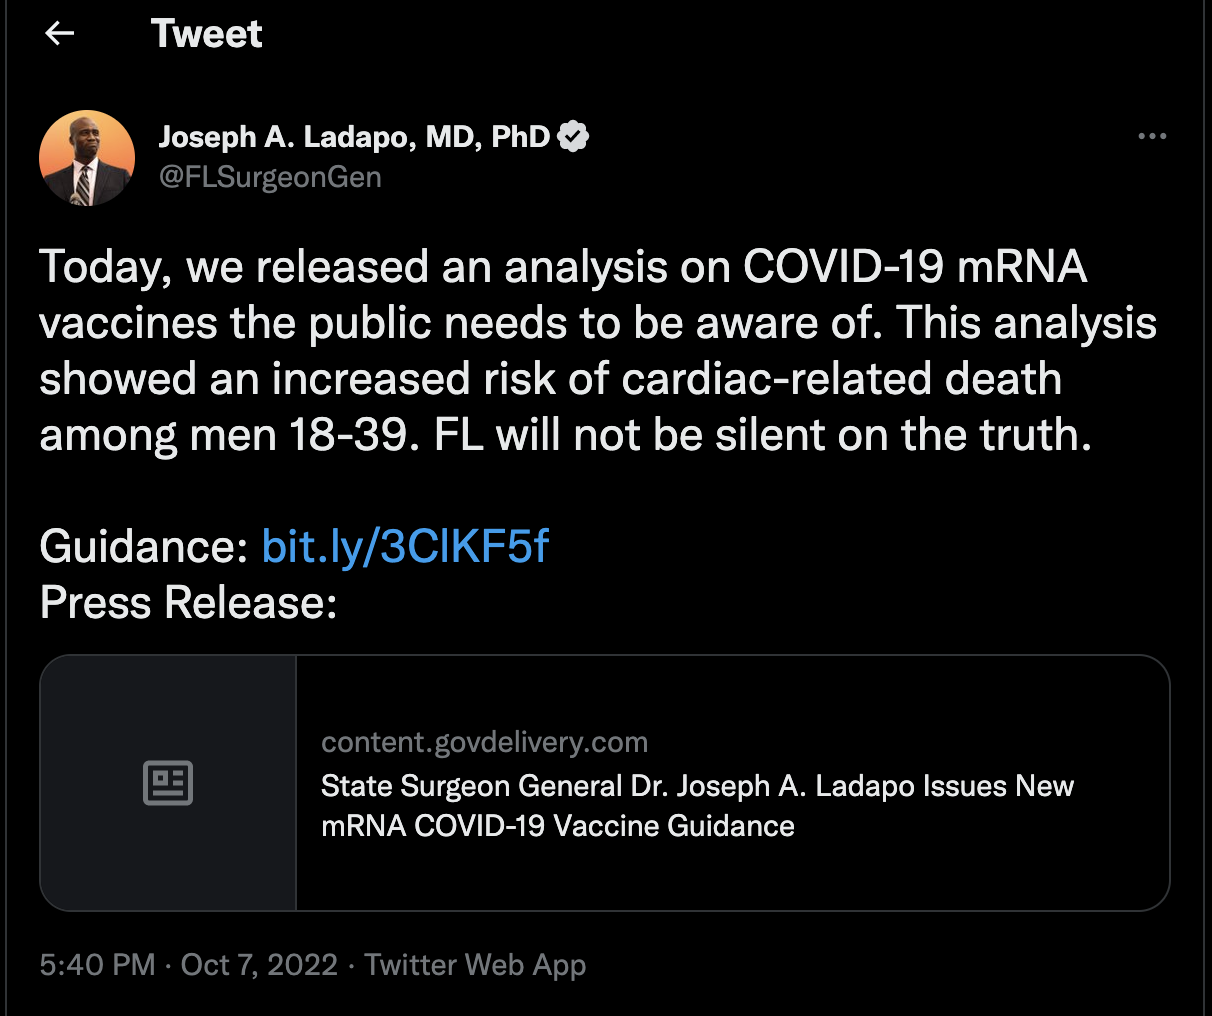 State Surgeon General Dr. Joseph A. Ladapo Issues New mRNA COVID-19 Vaccine Guidance